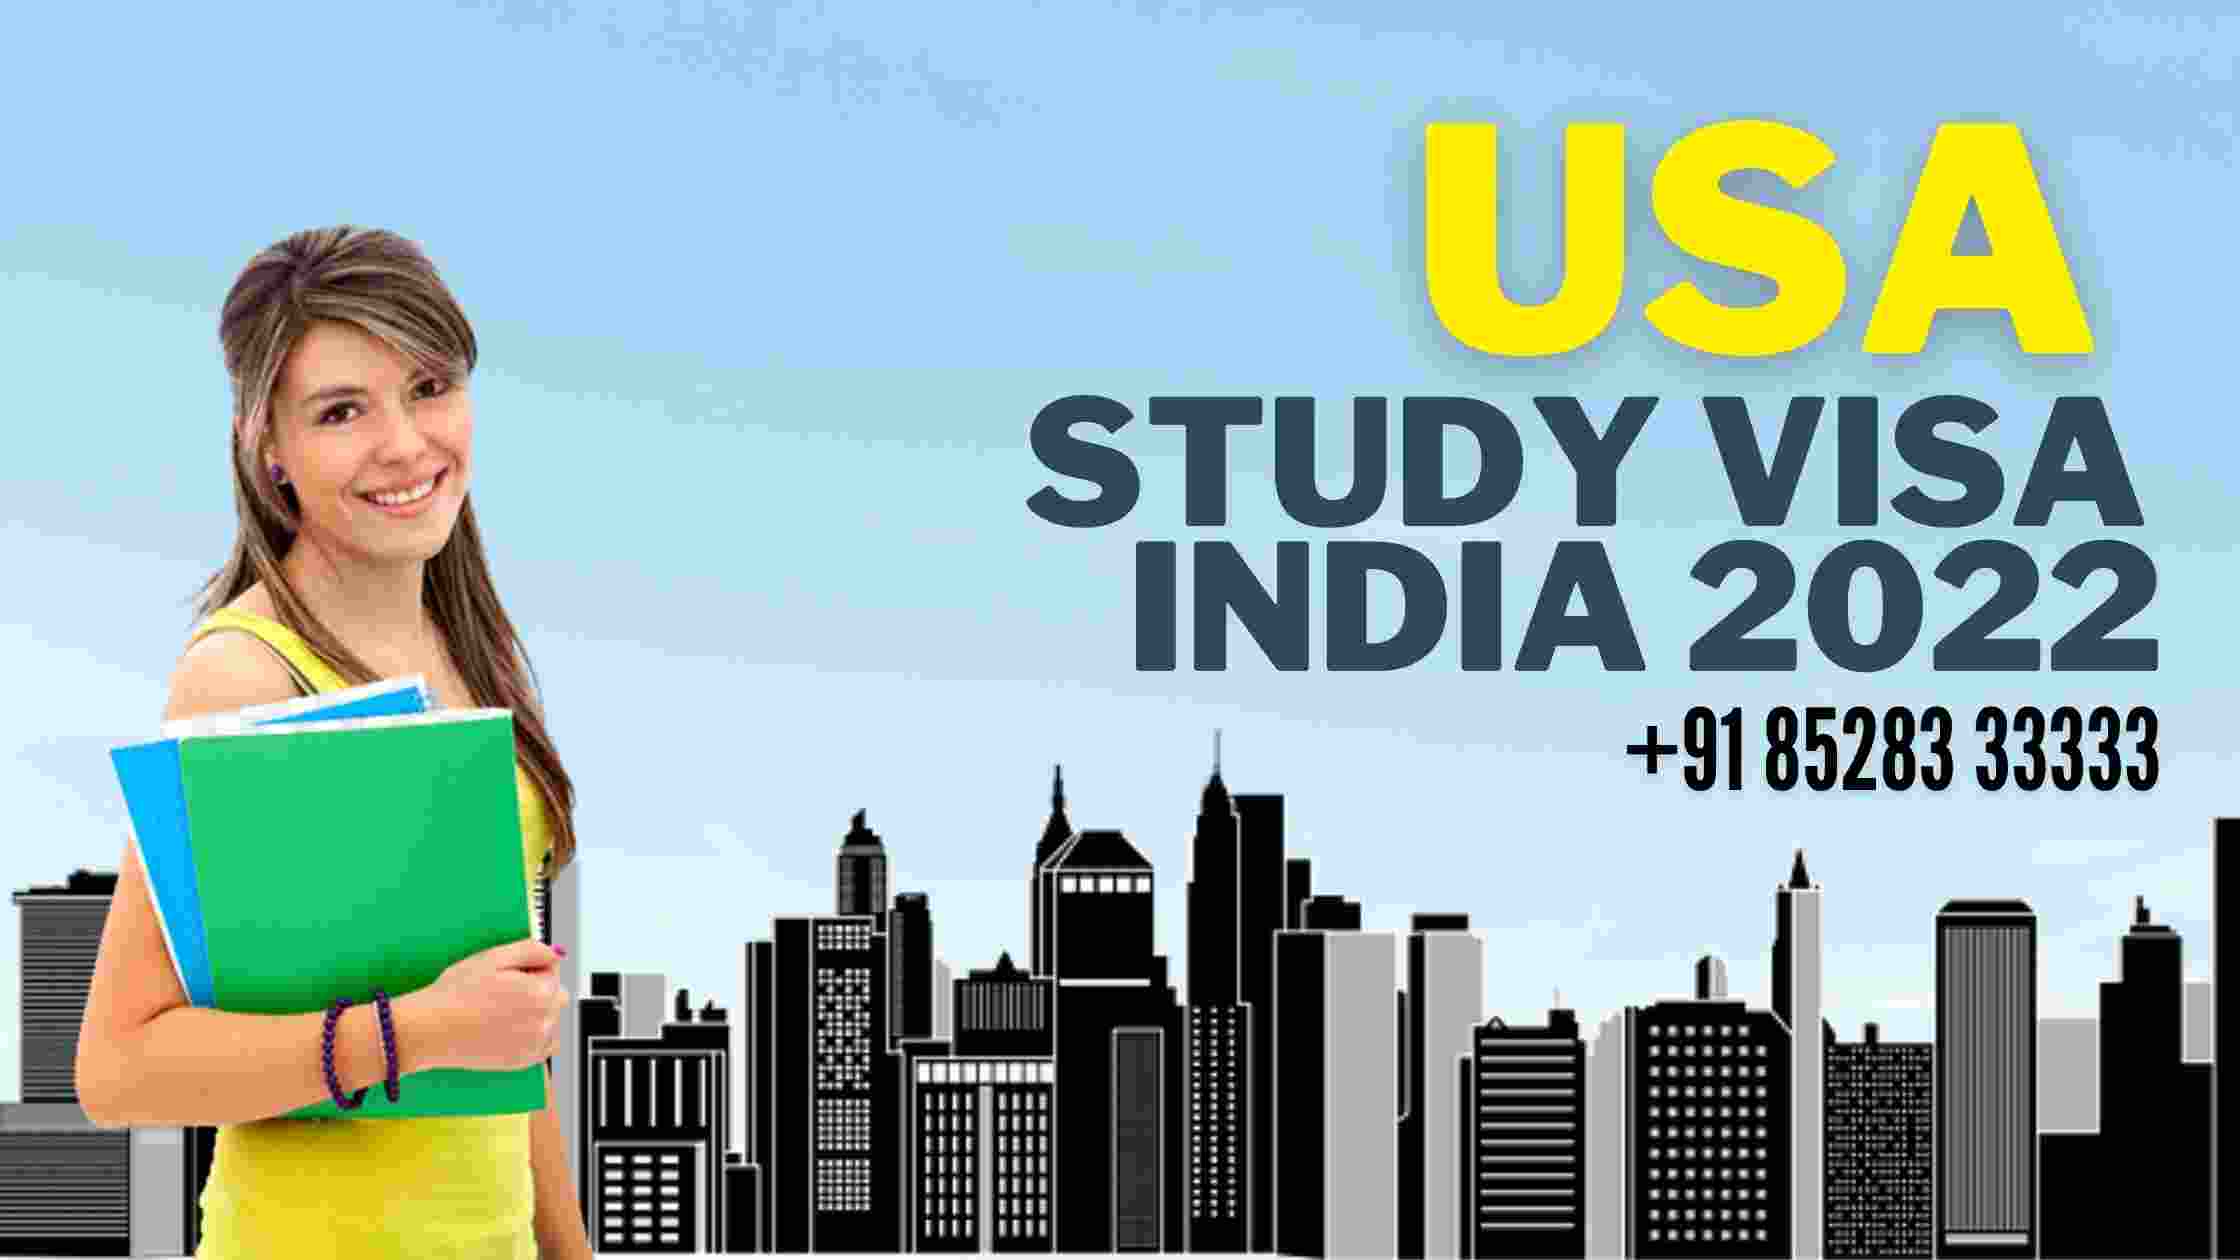 USA Study Visa for Indian students 2022